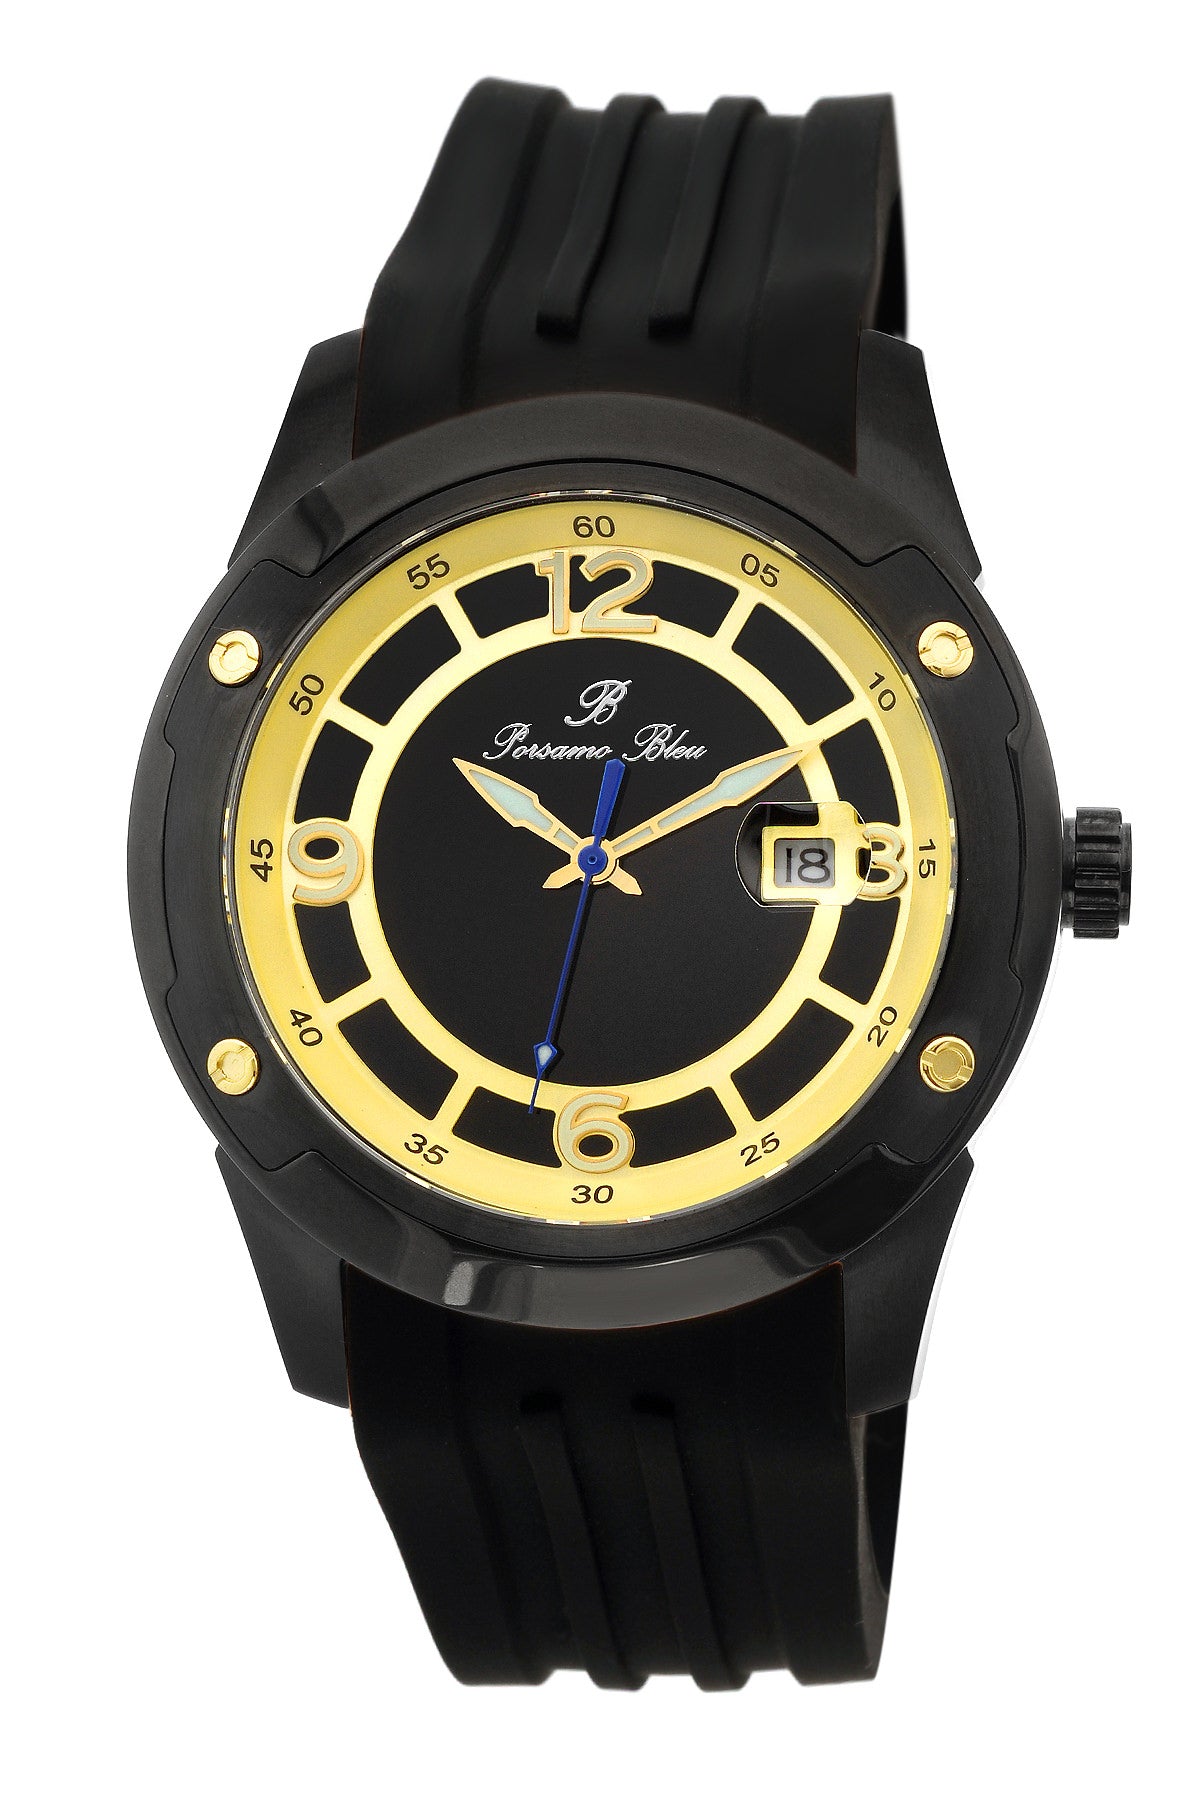 Porsamo Bleu Tokyo luxury Automatic men's watch, silicone strap, gold, black 172BTOR